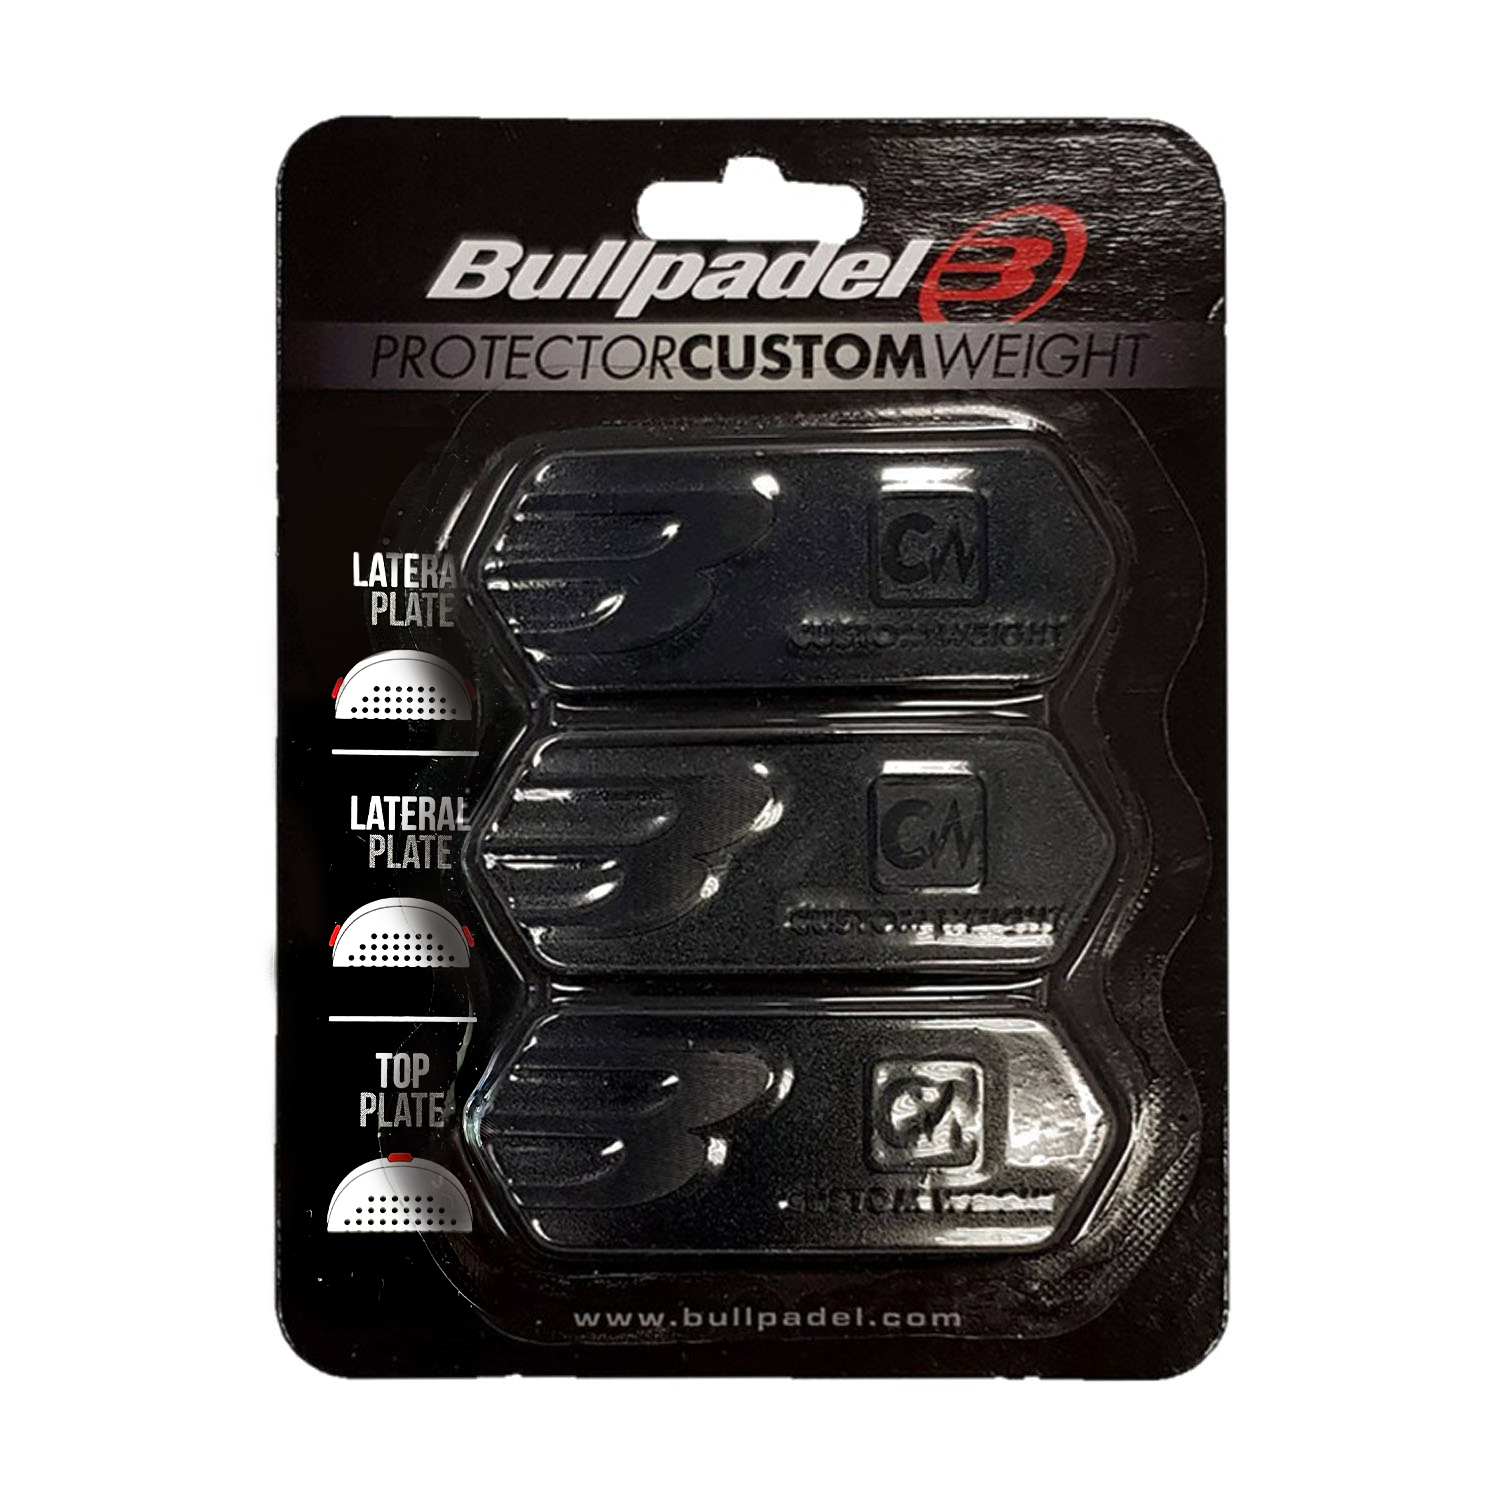 Bullpadel Custom Protectors Weights - Black